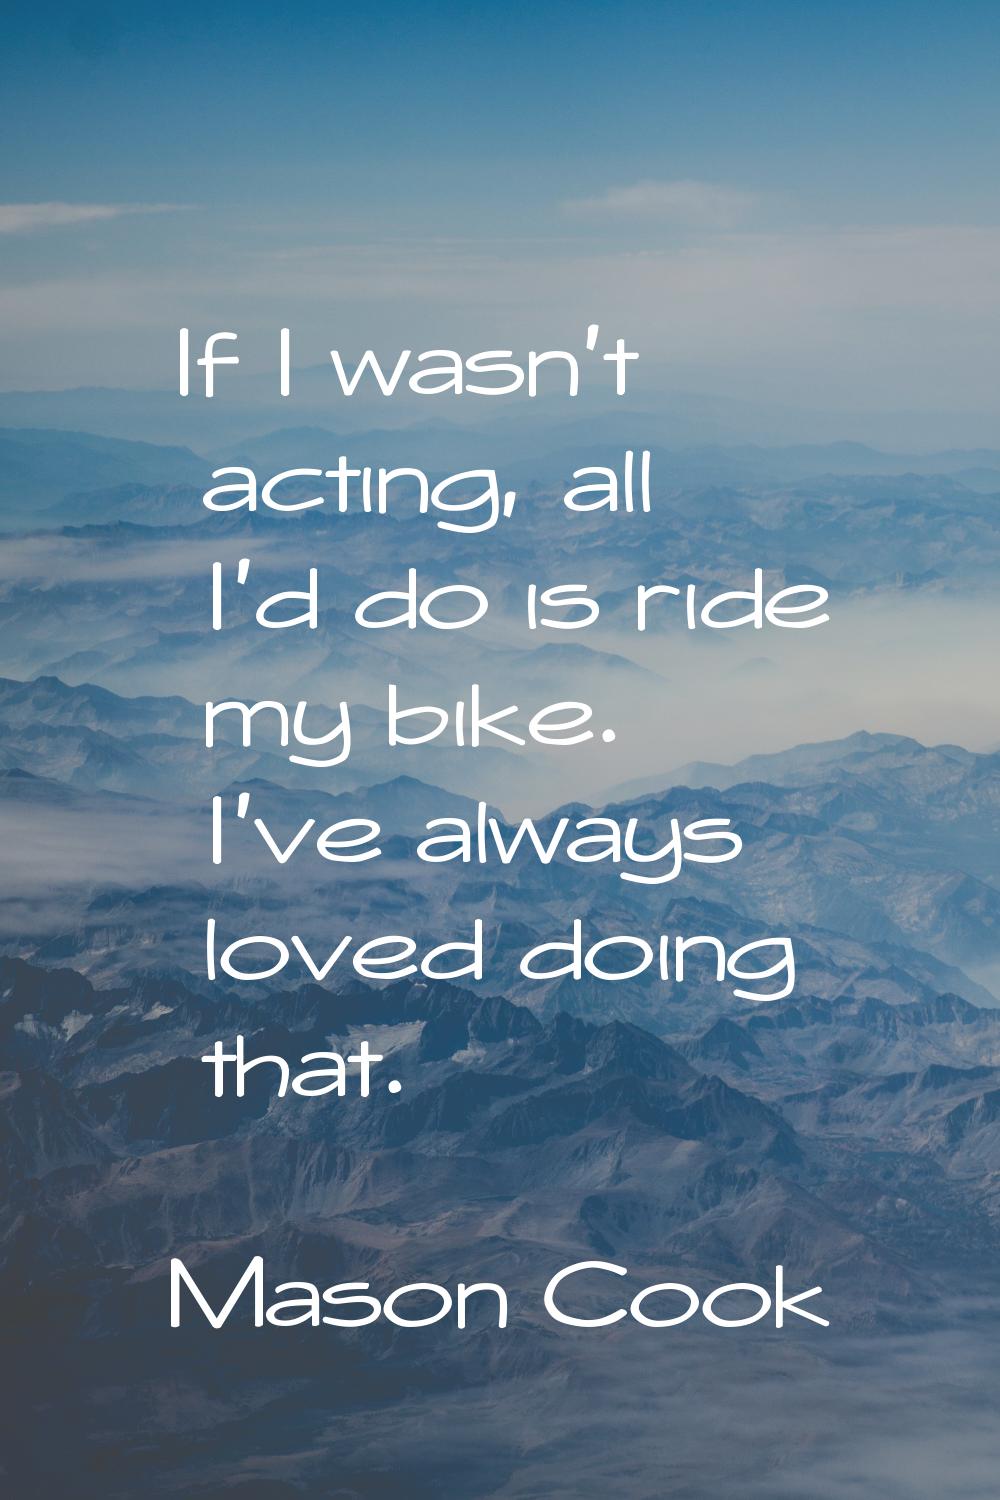 If I wasn't acting, all I'd do is ride my bike. I've always loved doing that.